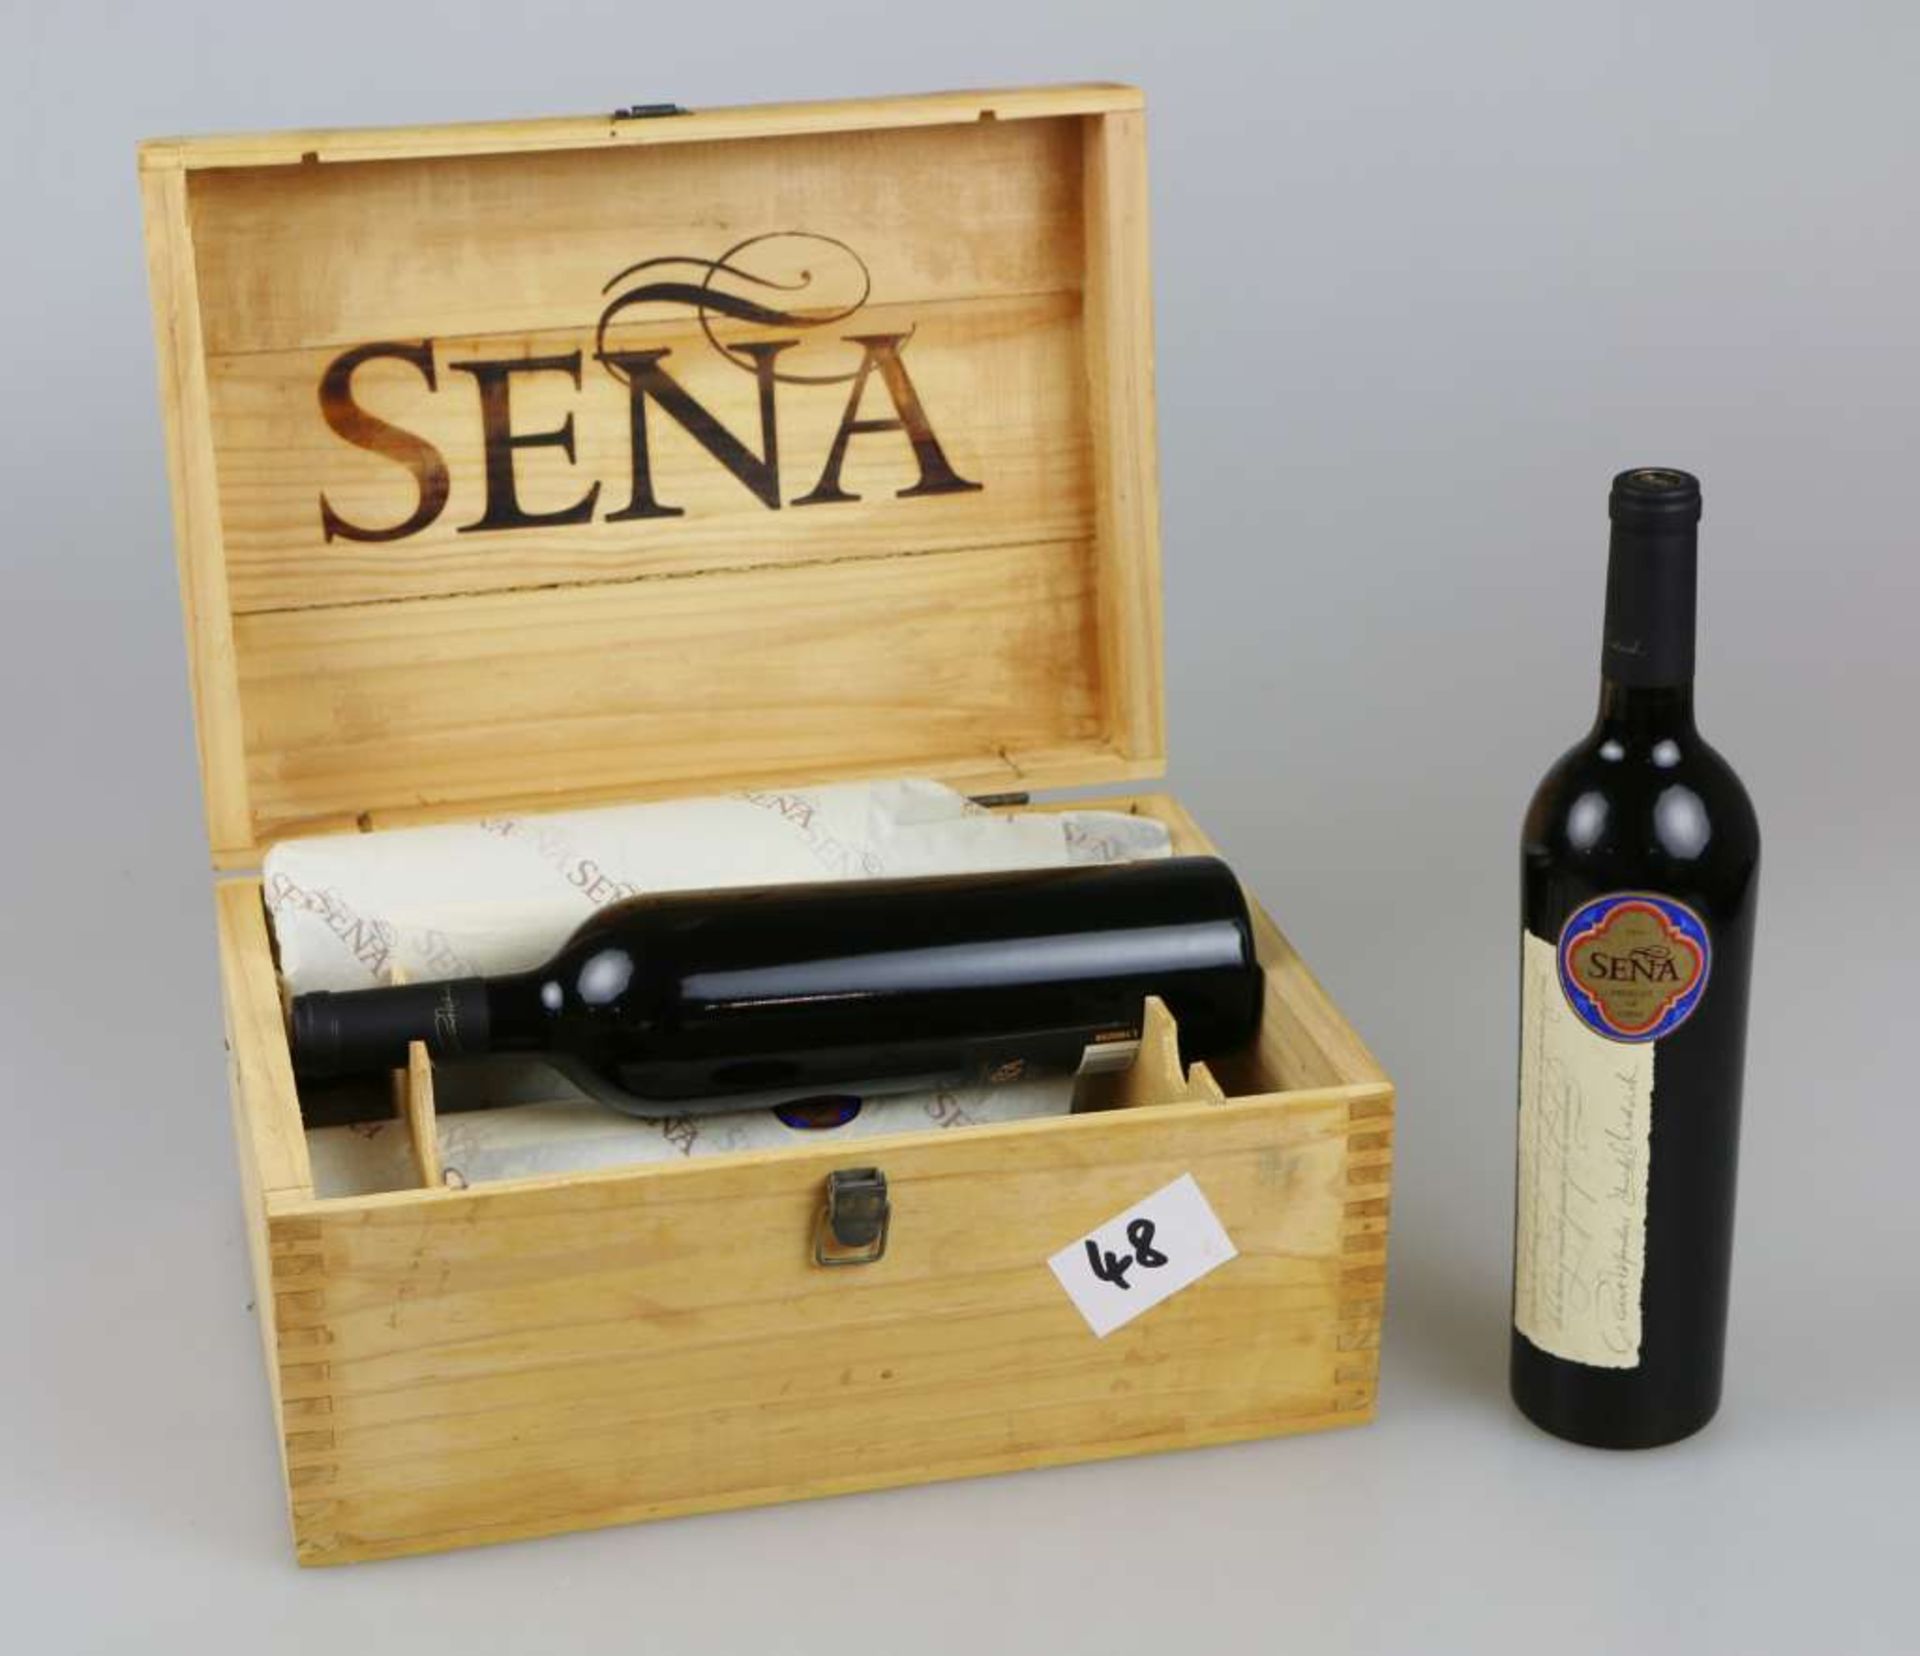 Rotwein, 6 Flaschen Sena, Vina Errazuriz/ Mondavi, Aconcagua Valley Chile, 1996, 0,75 L. In